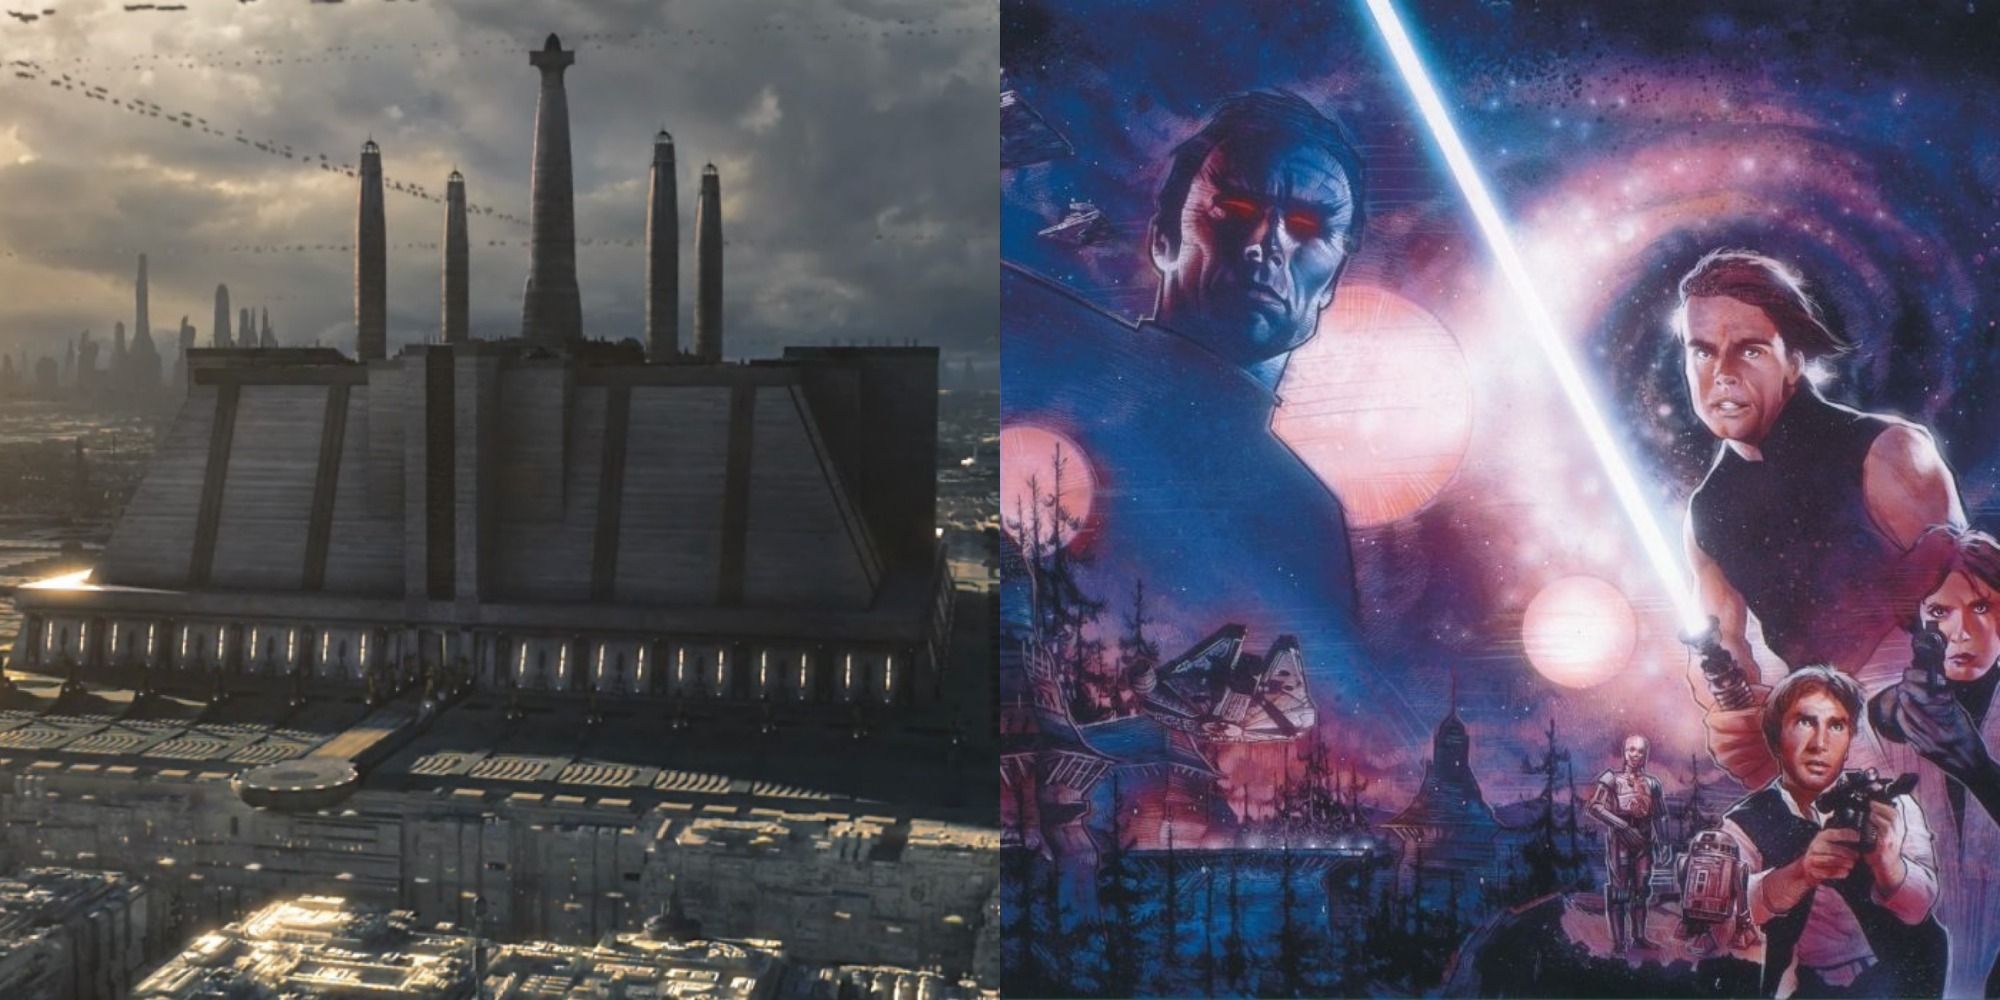 A split image of the buildings in Coruscant and Luke Skywalker wielding a lightsaber in Star Wars